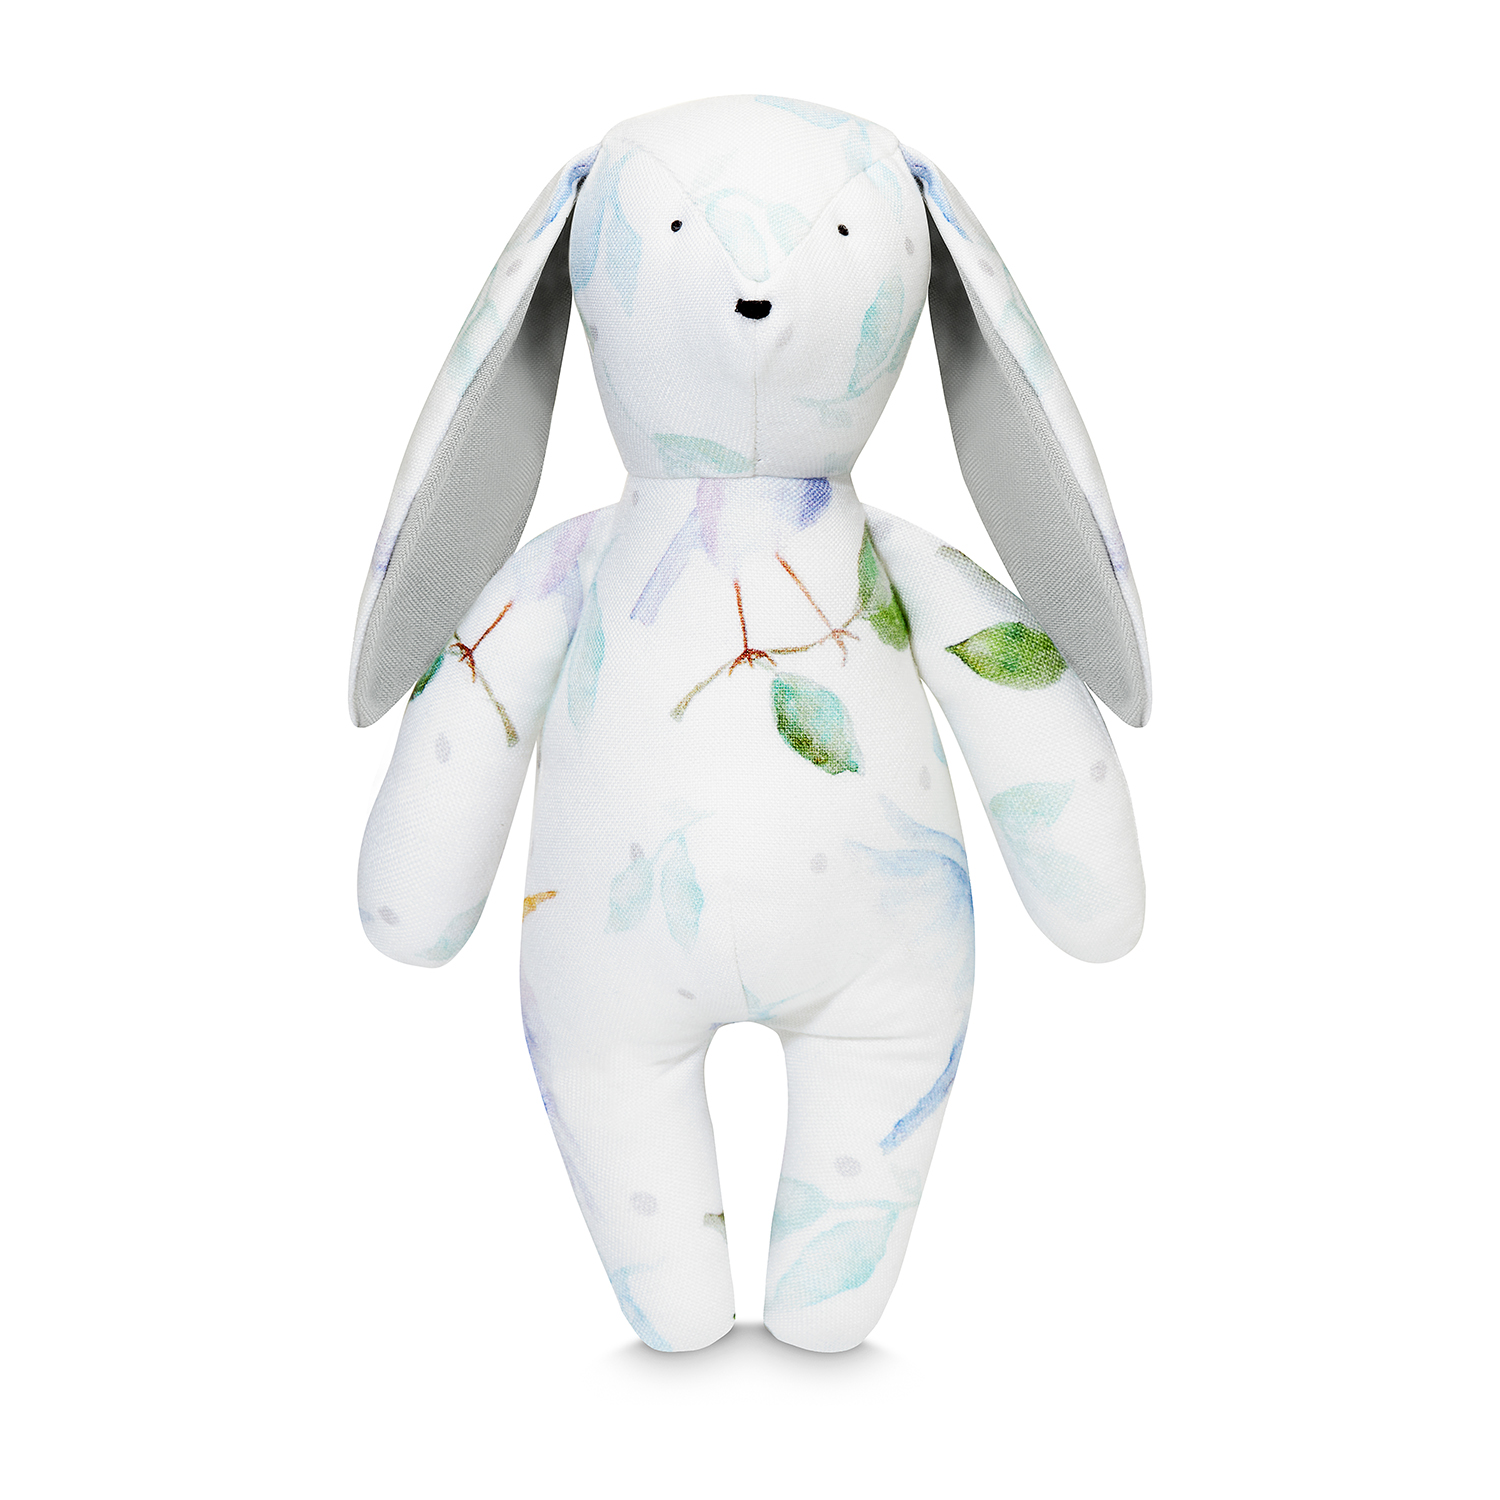 Bunio bunny soft toy - Heavenly birds